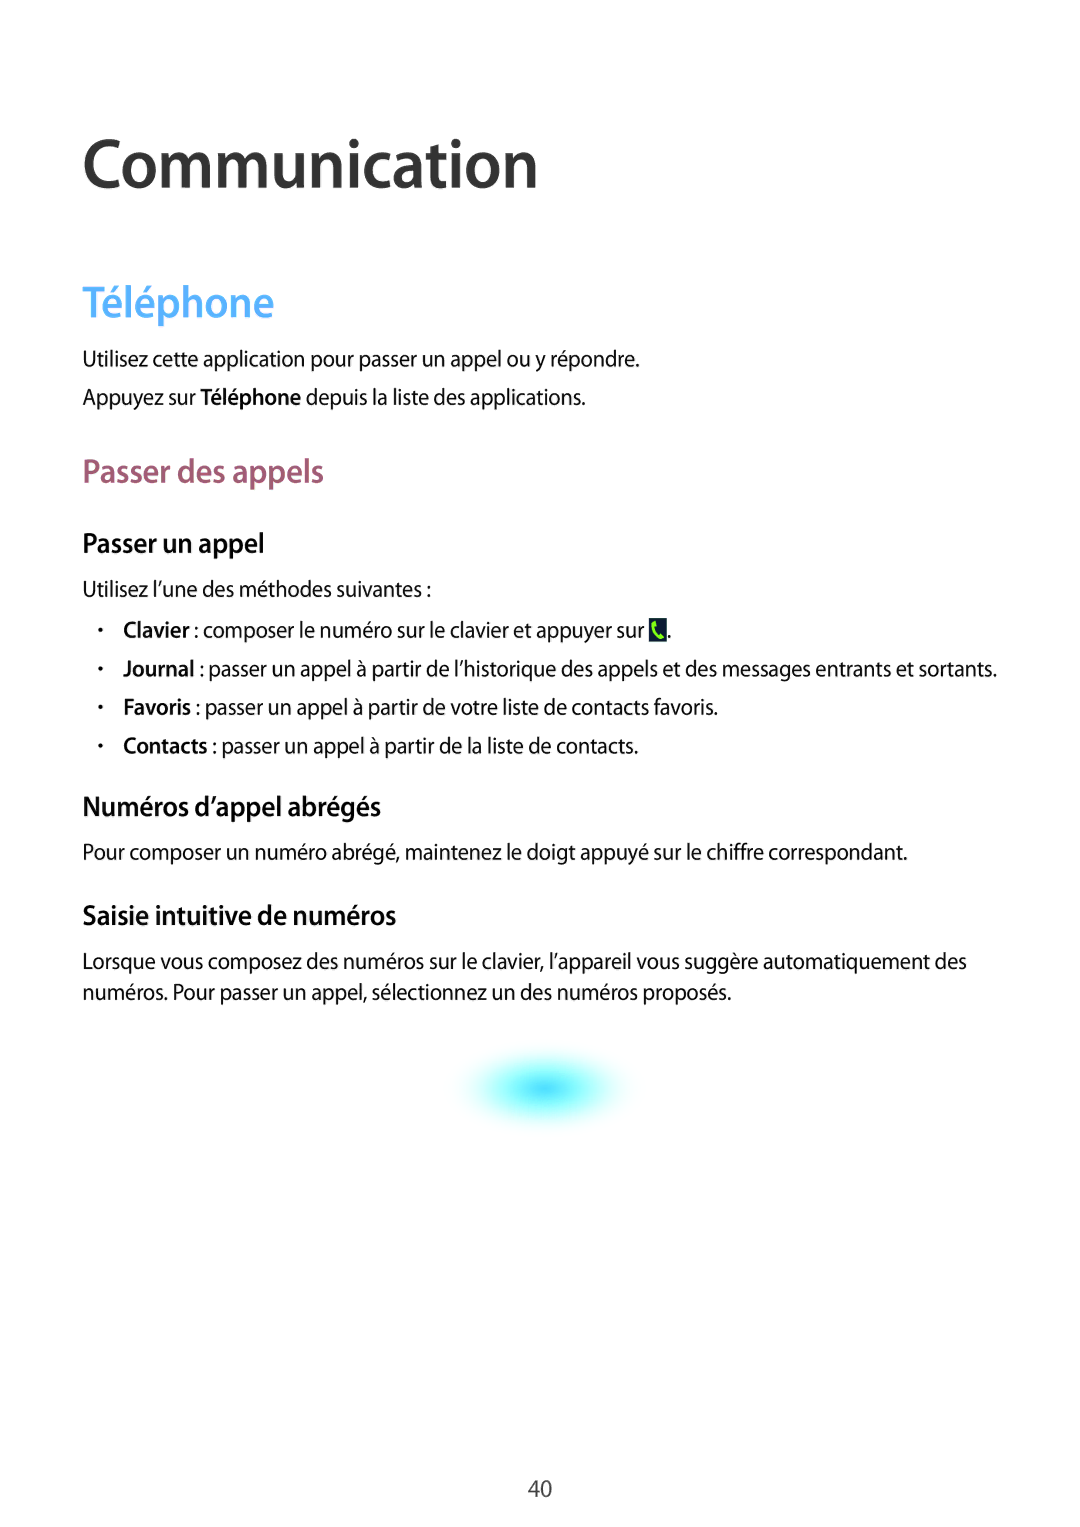 Samsung GT-S7710KRABGL, GT-S7710TAABGL manual Communication, Téléphone, Passer des appels 